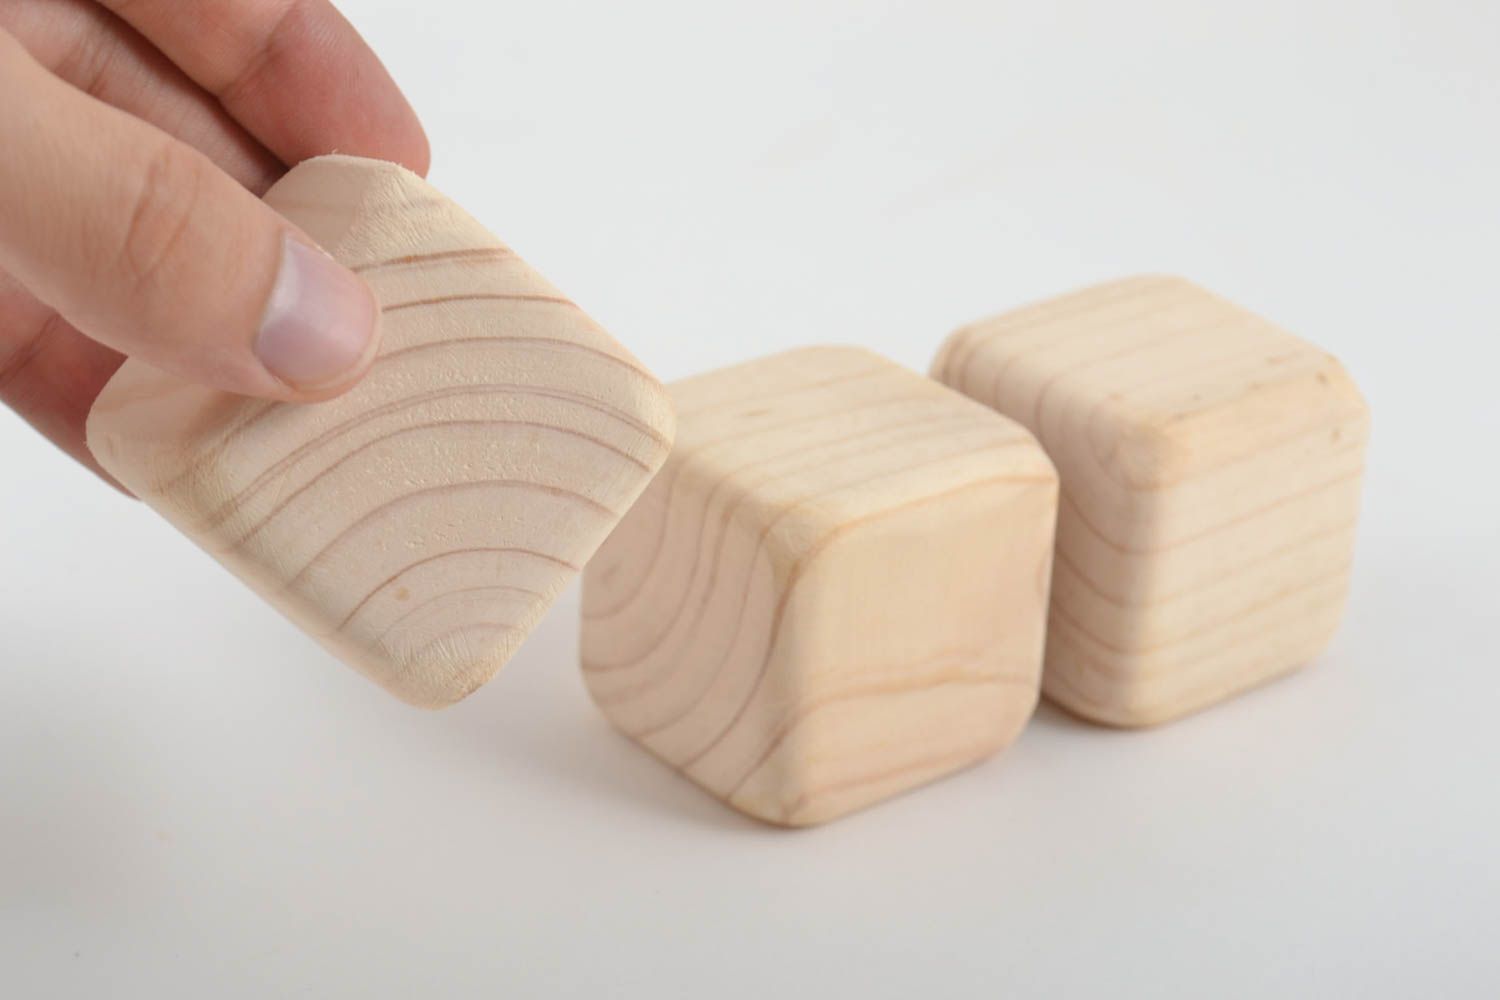 Handmade toy blocks toy blocks for baby wooden toy blocks set of 3 items photo 5